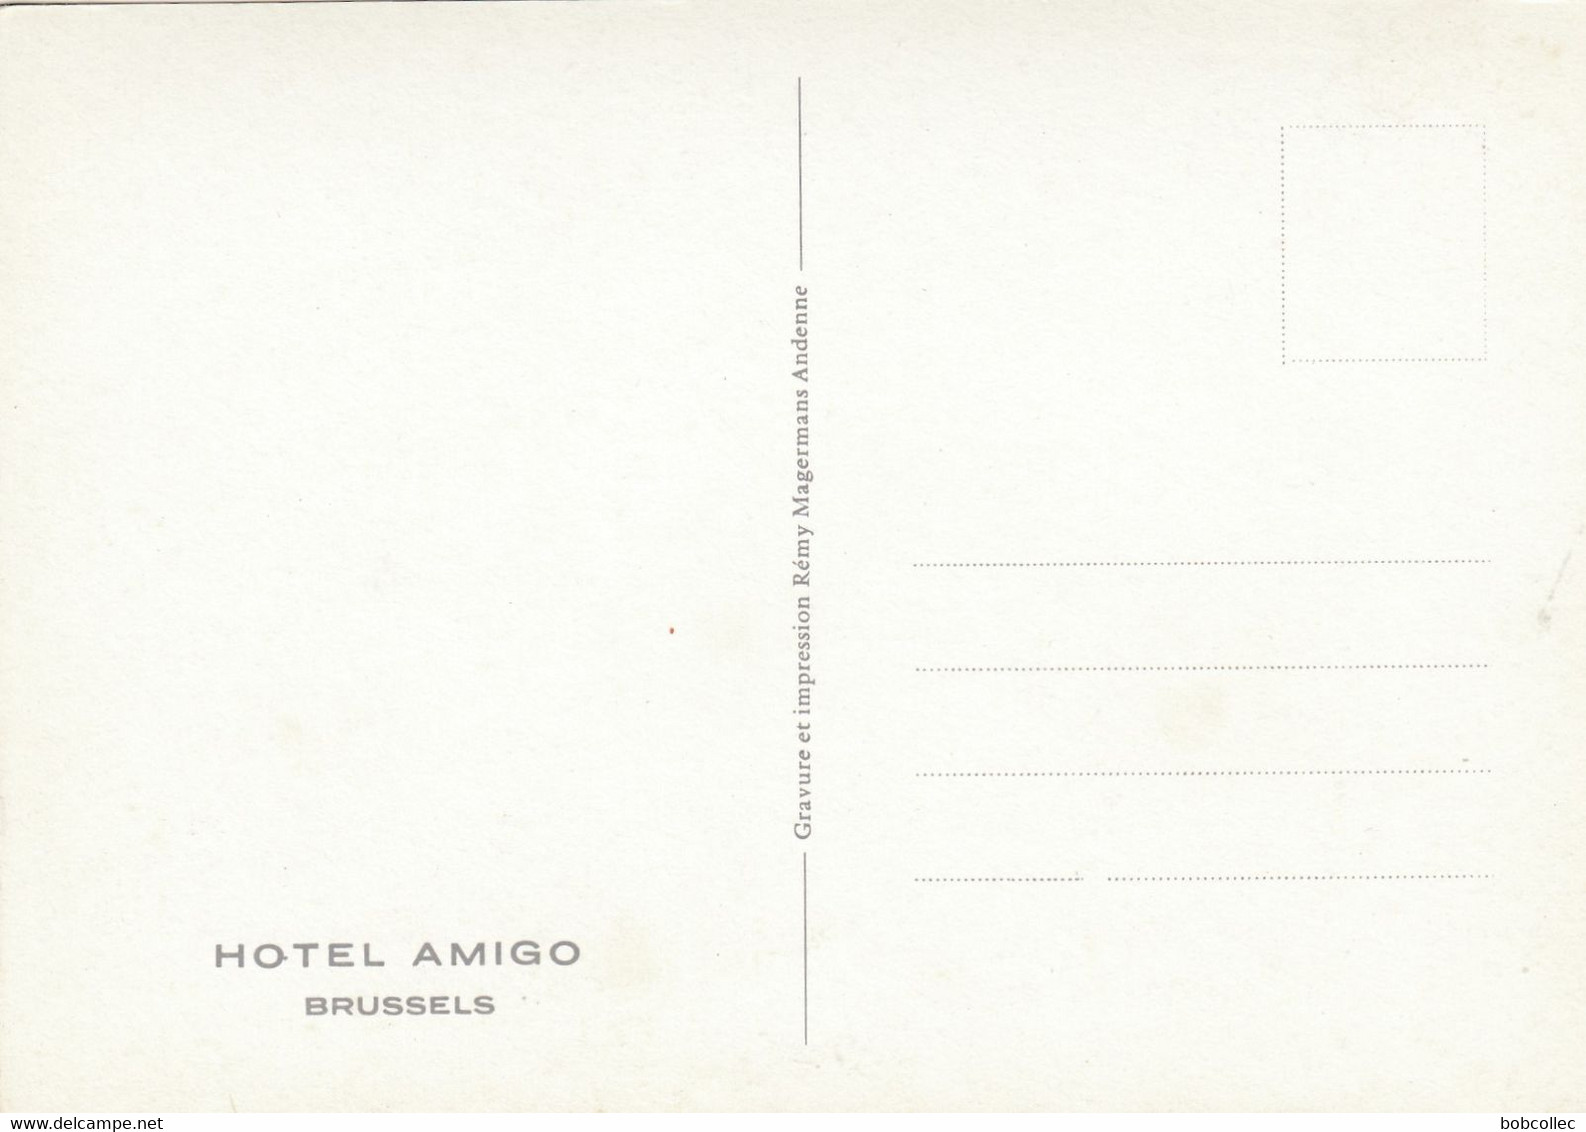 BRUSSELS: Hotel AMIGO - Cafés, Hôtels, Restaurants